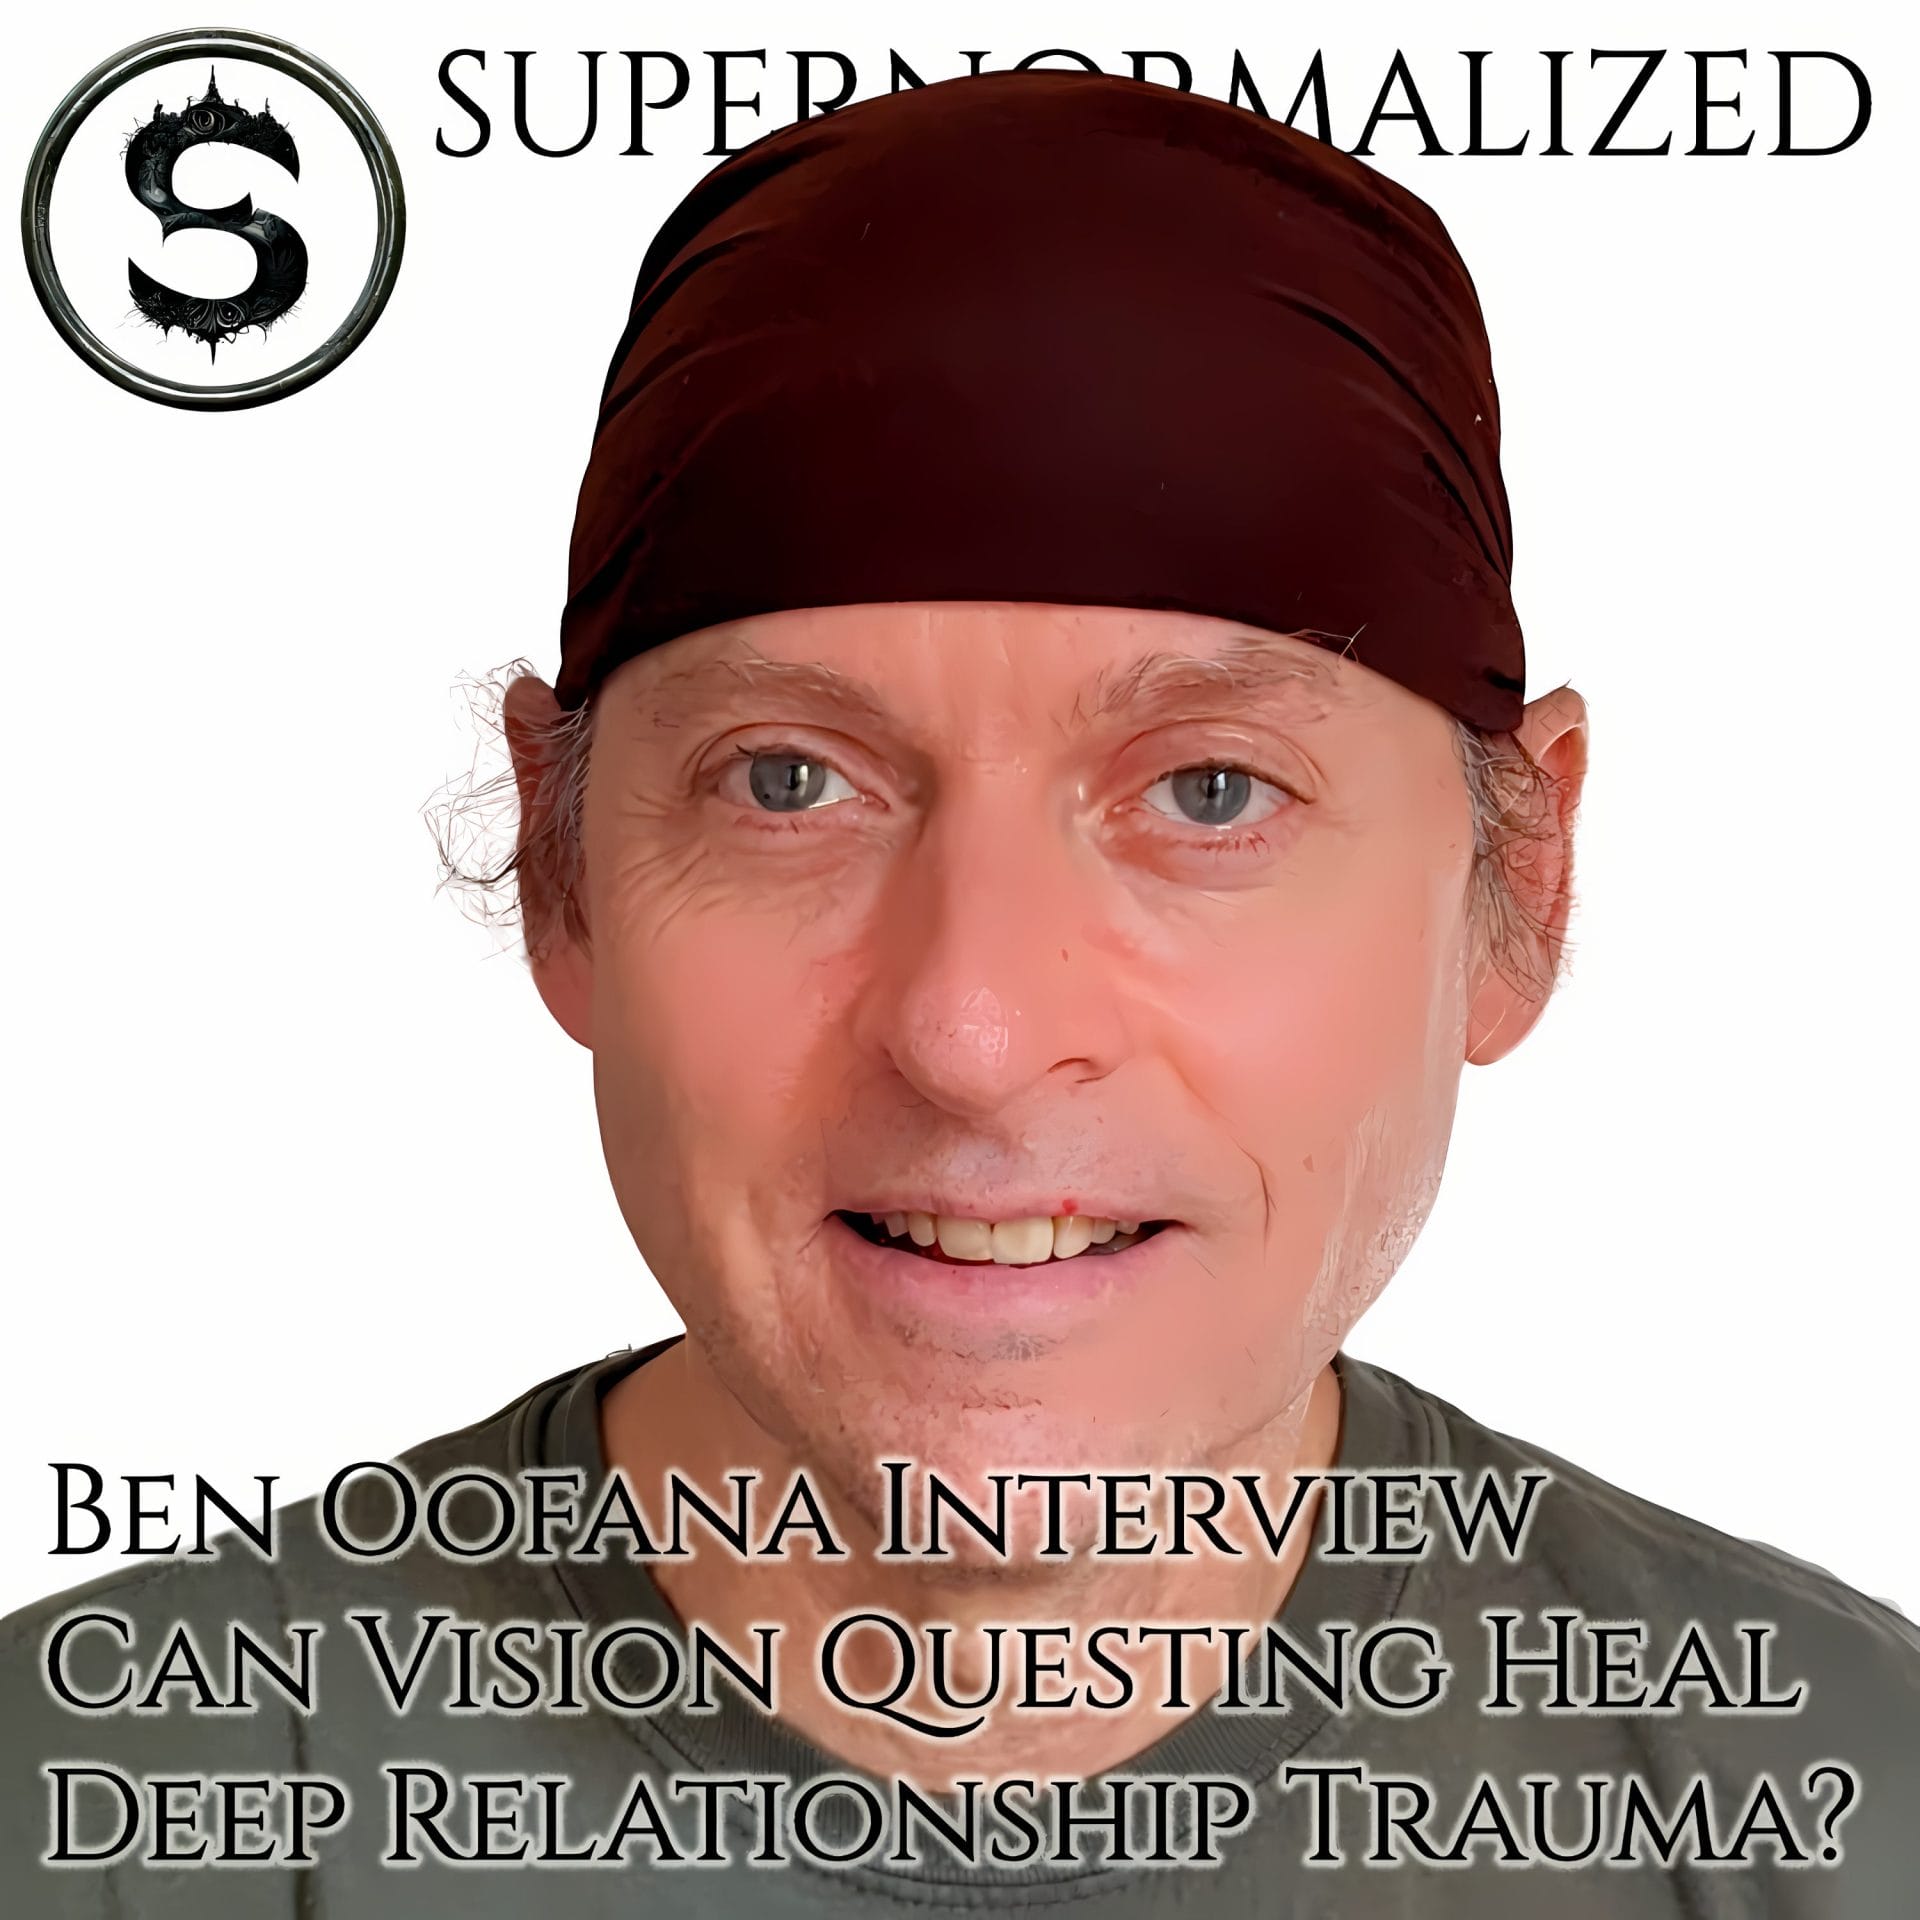 Ben Oofana Interview Can Vision Questing Heal Deep Relationship Trauma?